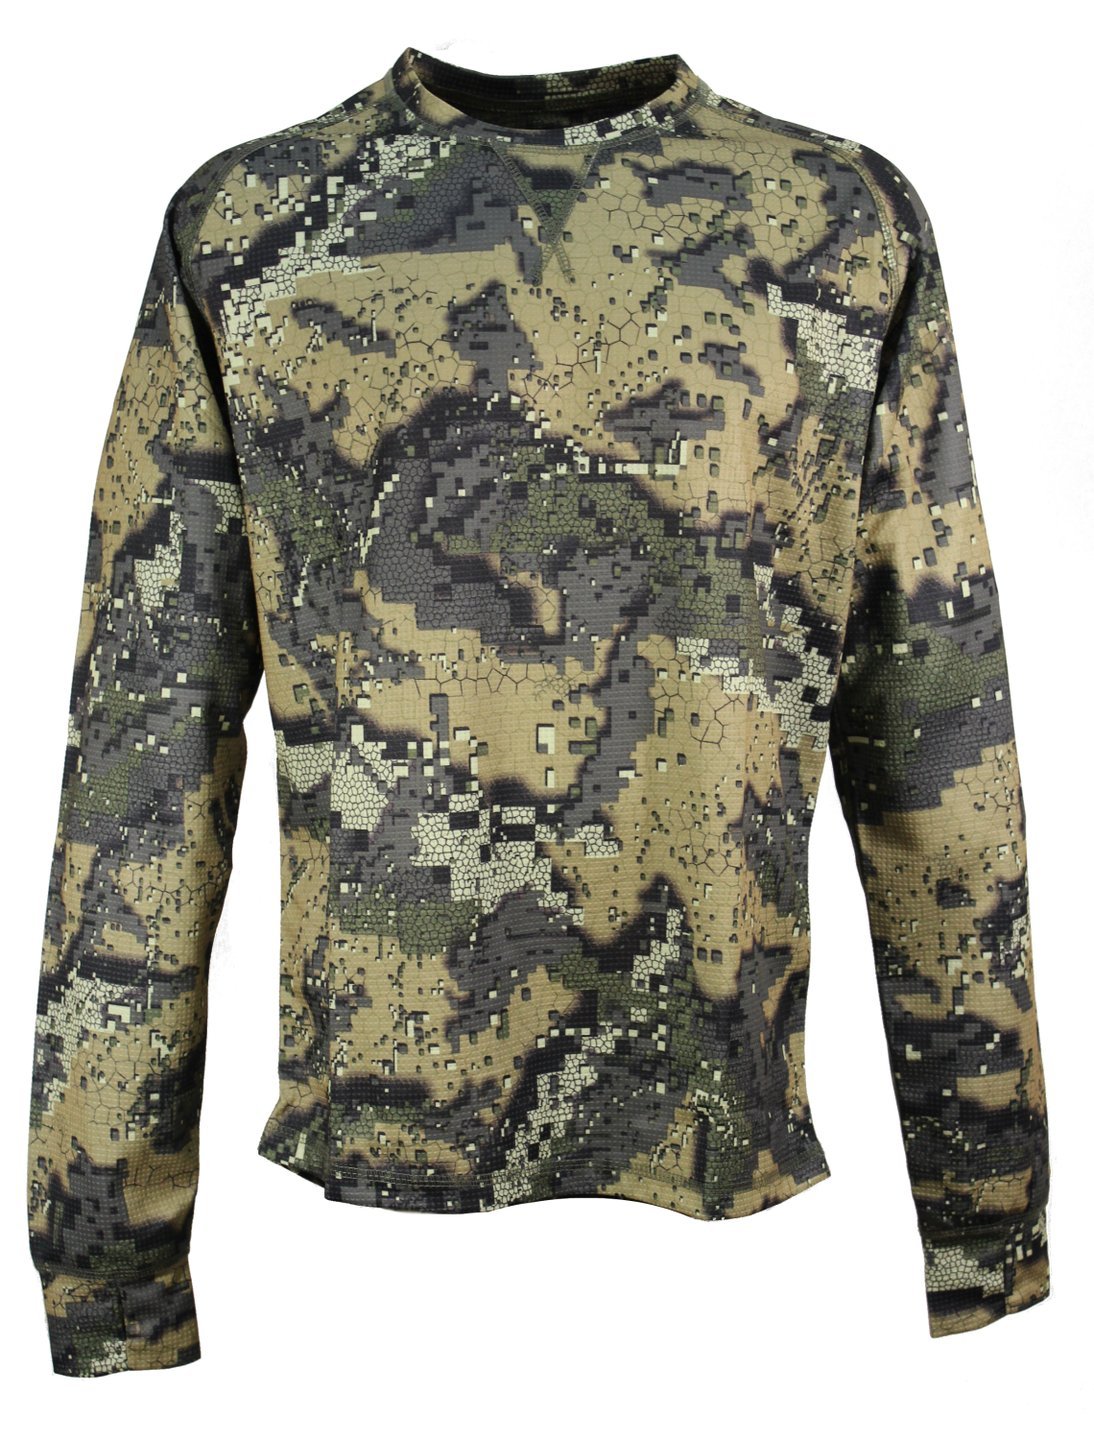 Джемпер охотничий  Remington Men's  Camouflage T-Shirt  APG Hunting Camo, цвет Optifade, р. M (RM1305-999)